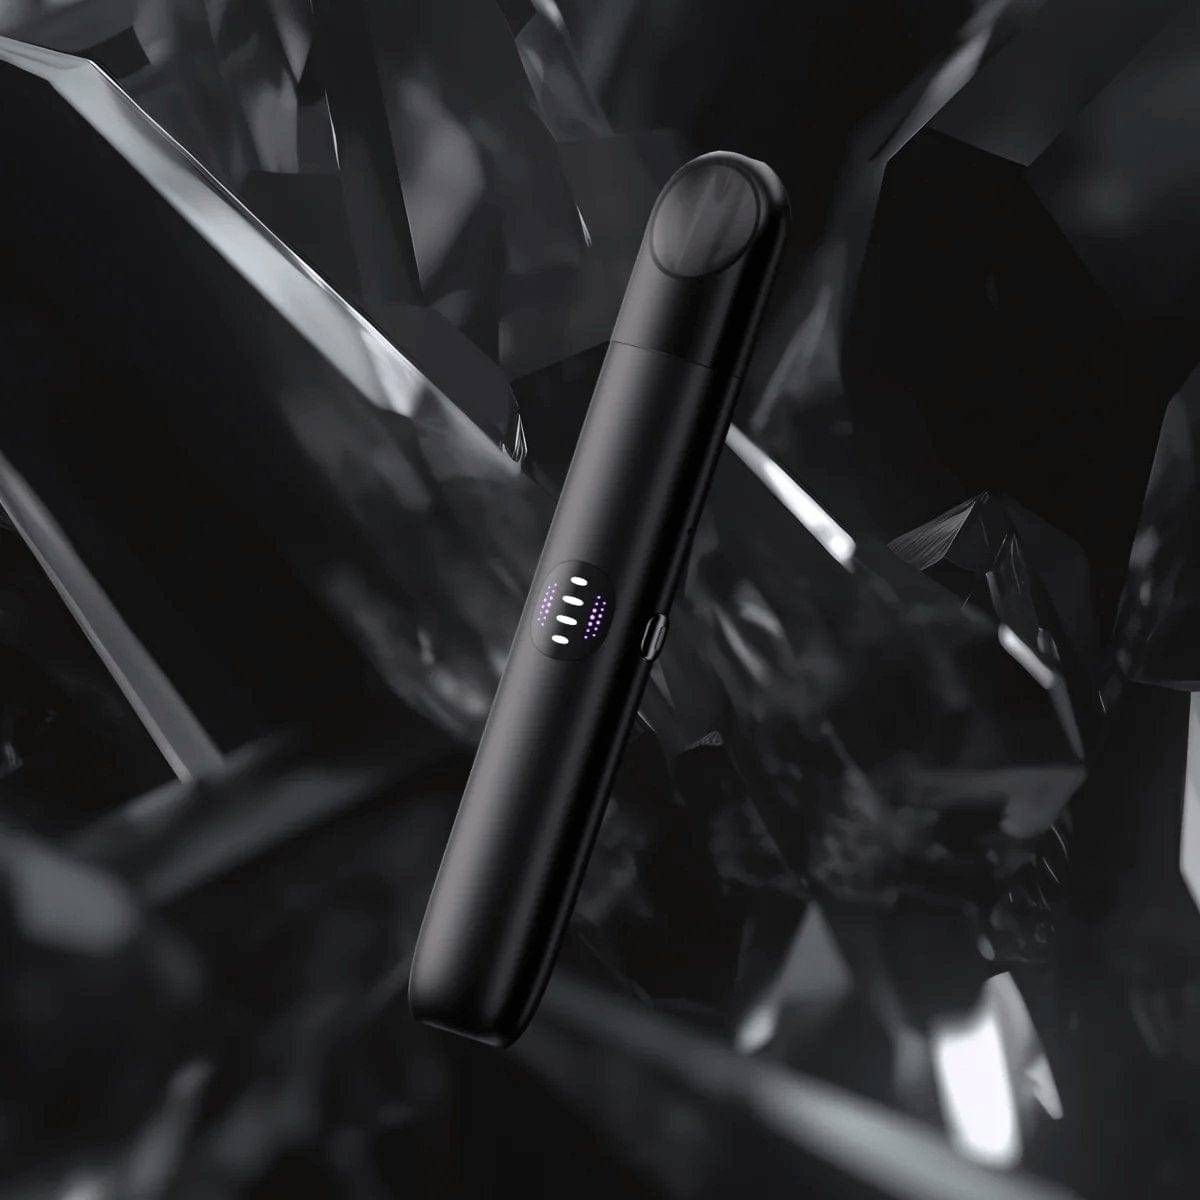 Relx Infinity 2 Device-Obsidian Black